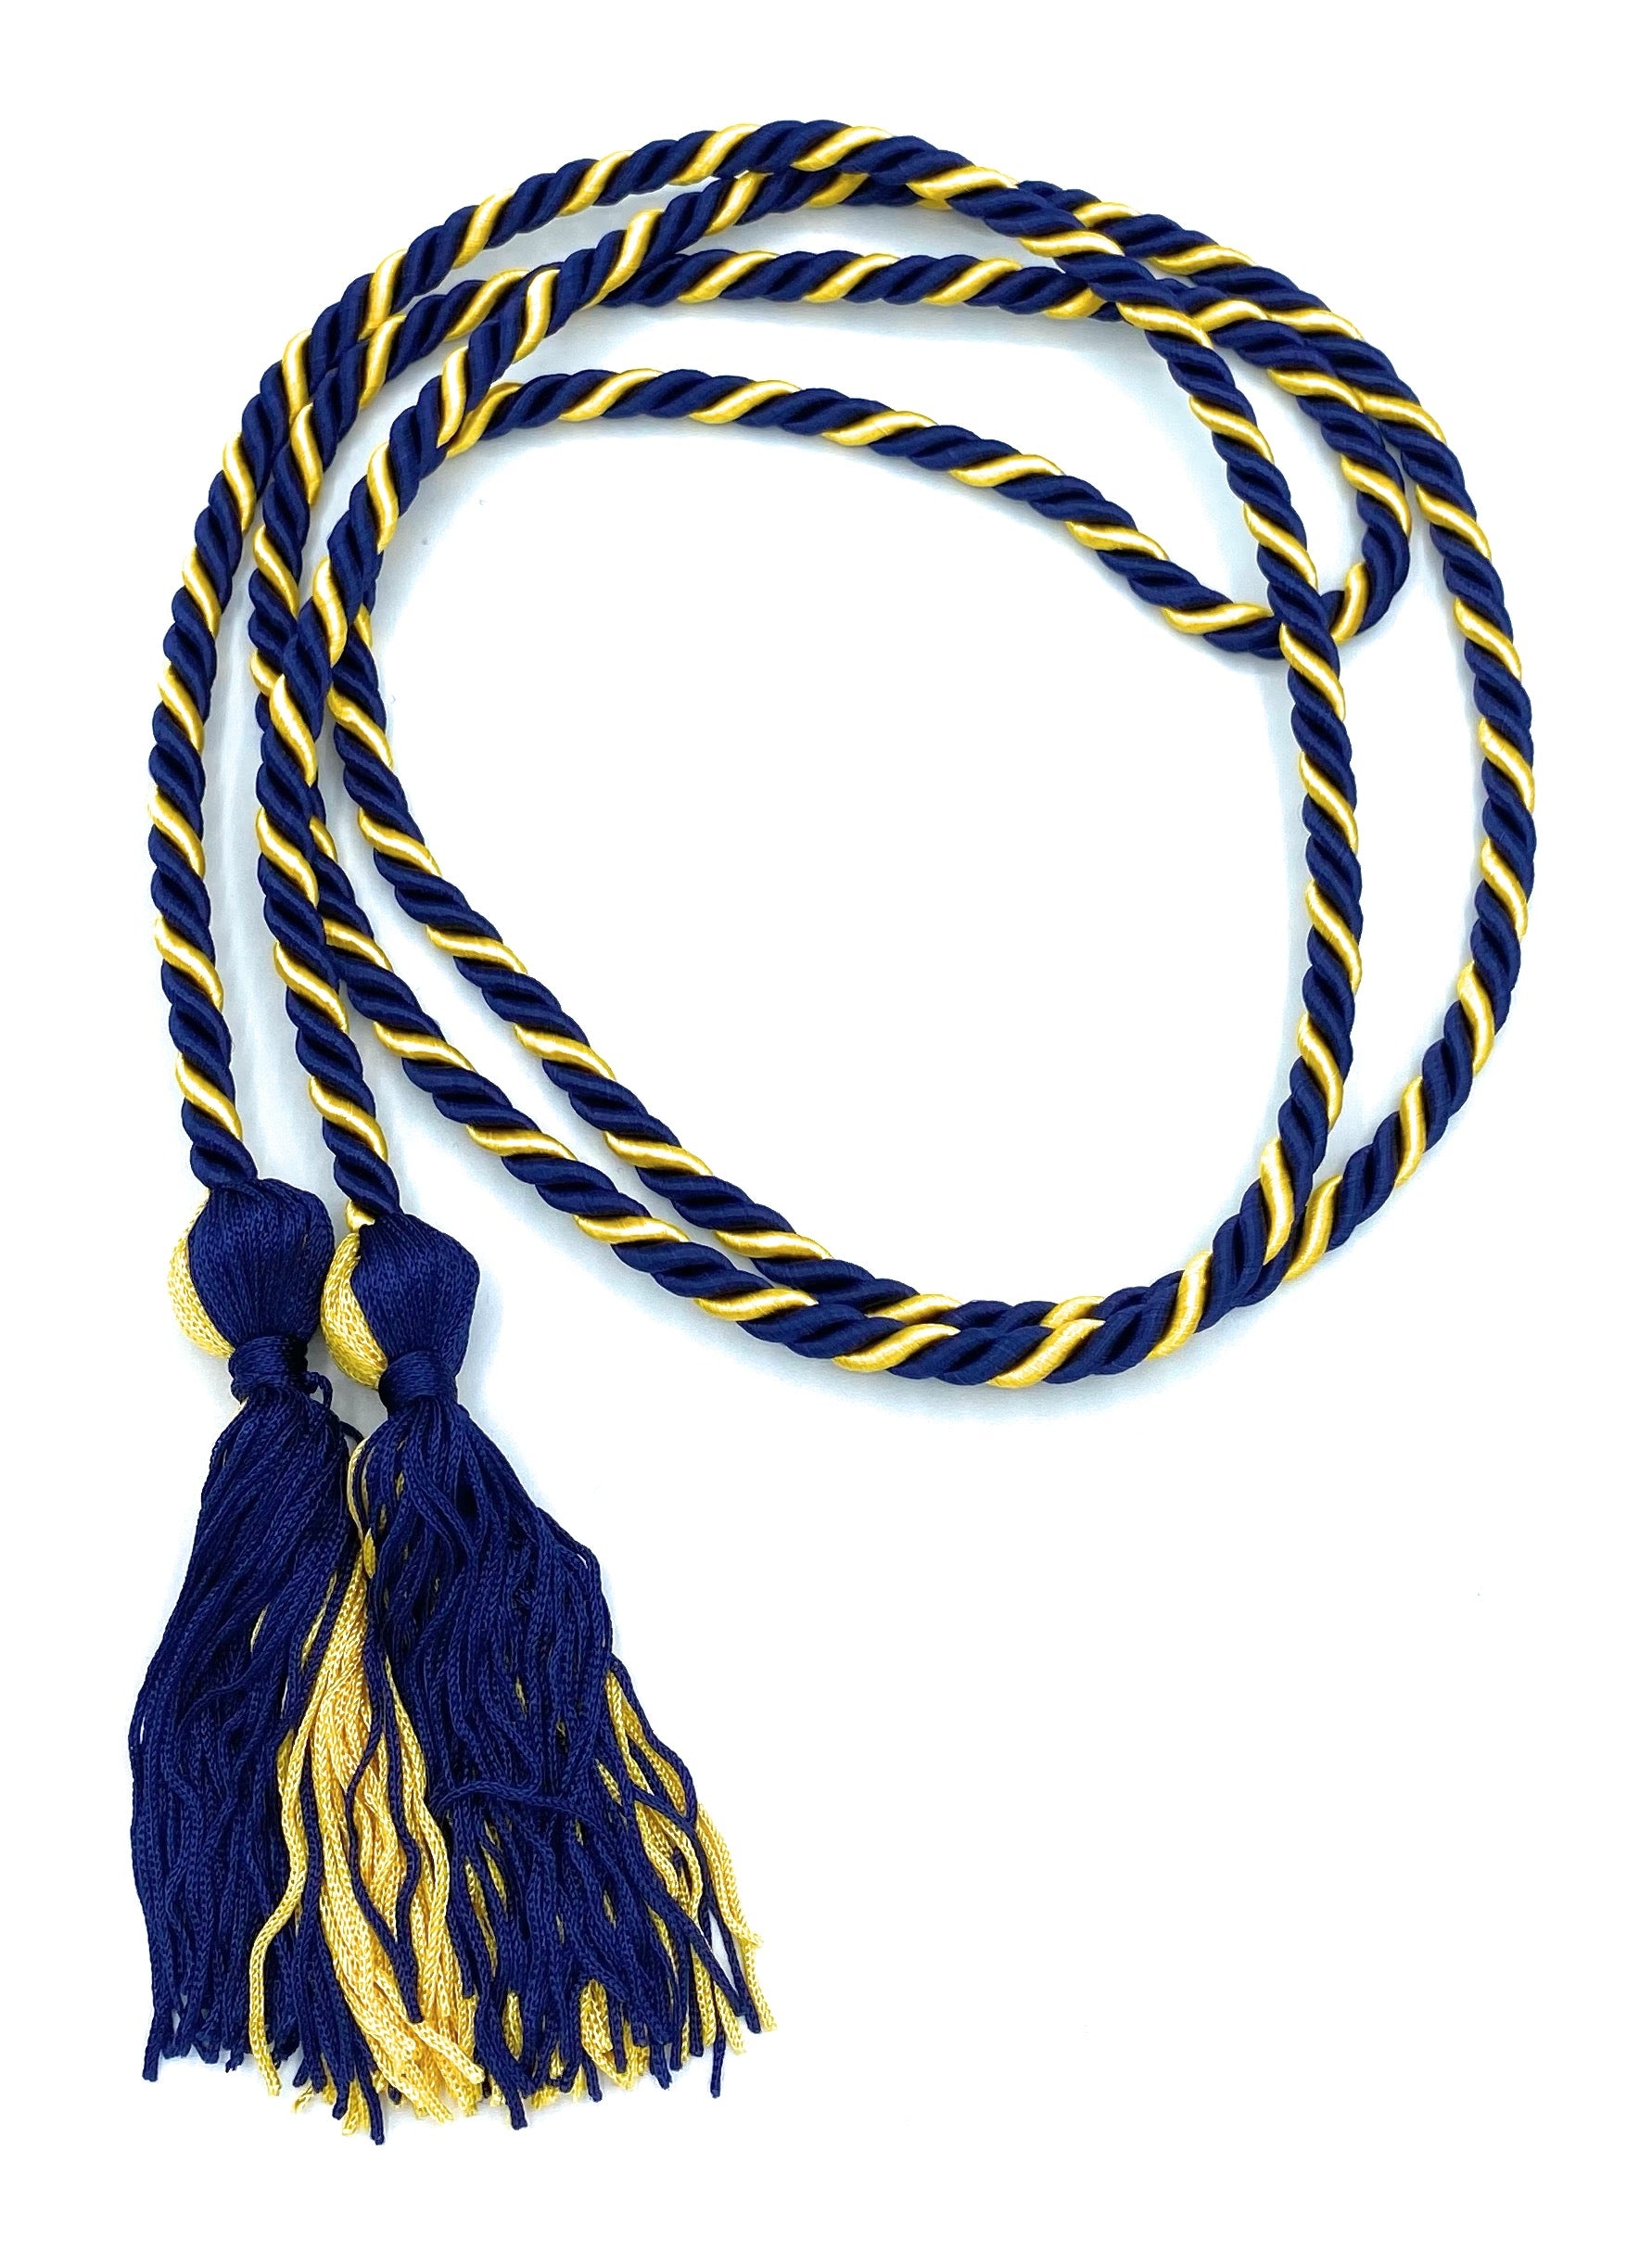 Gold Honor Cord, Gold Cord Graduation